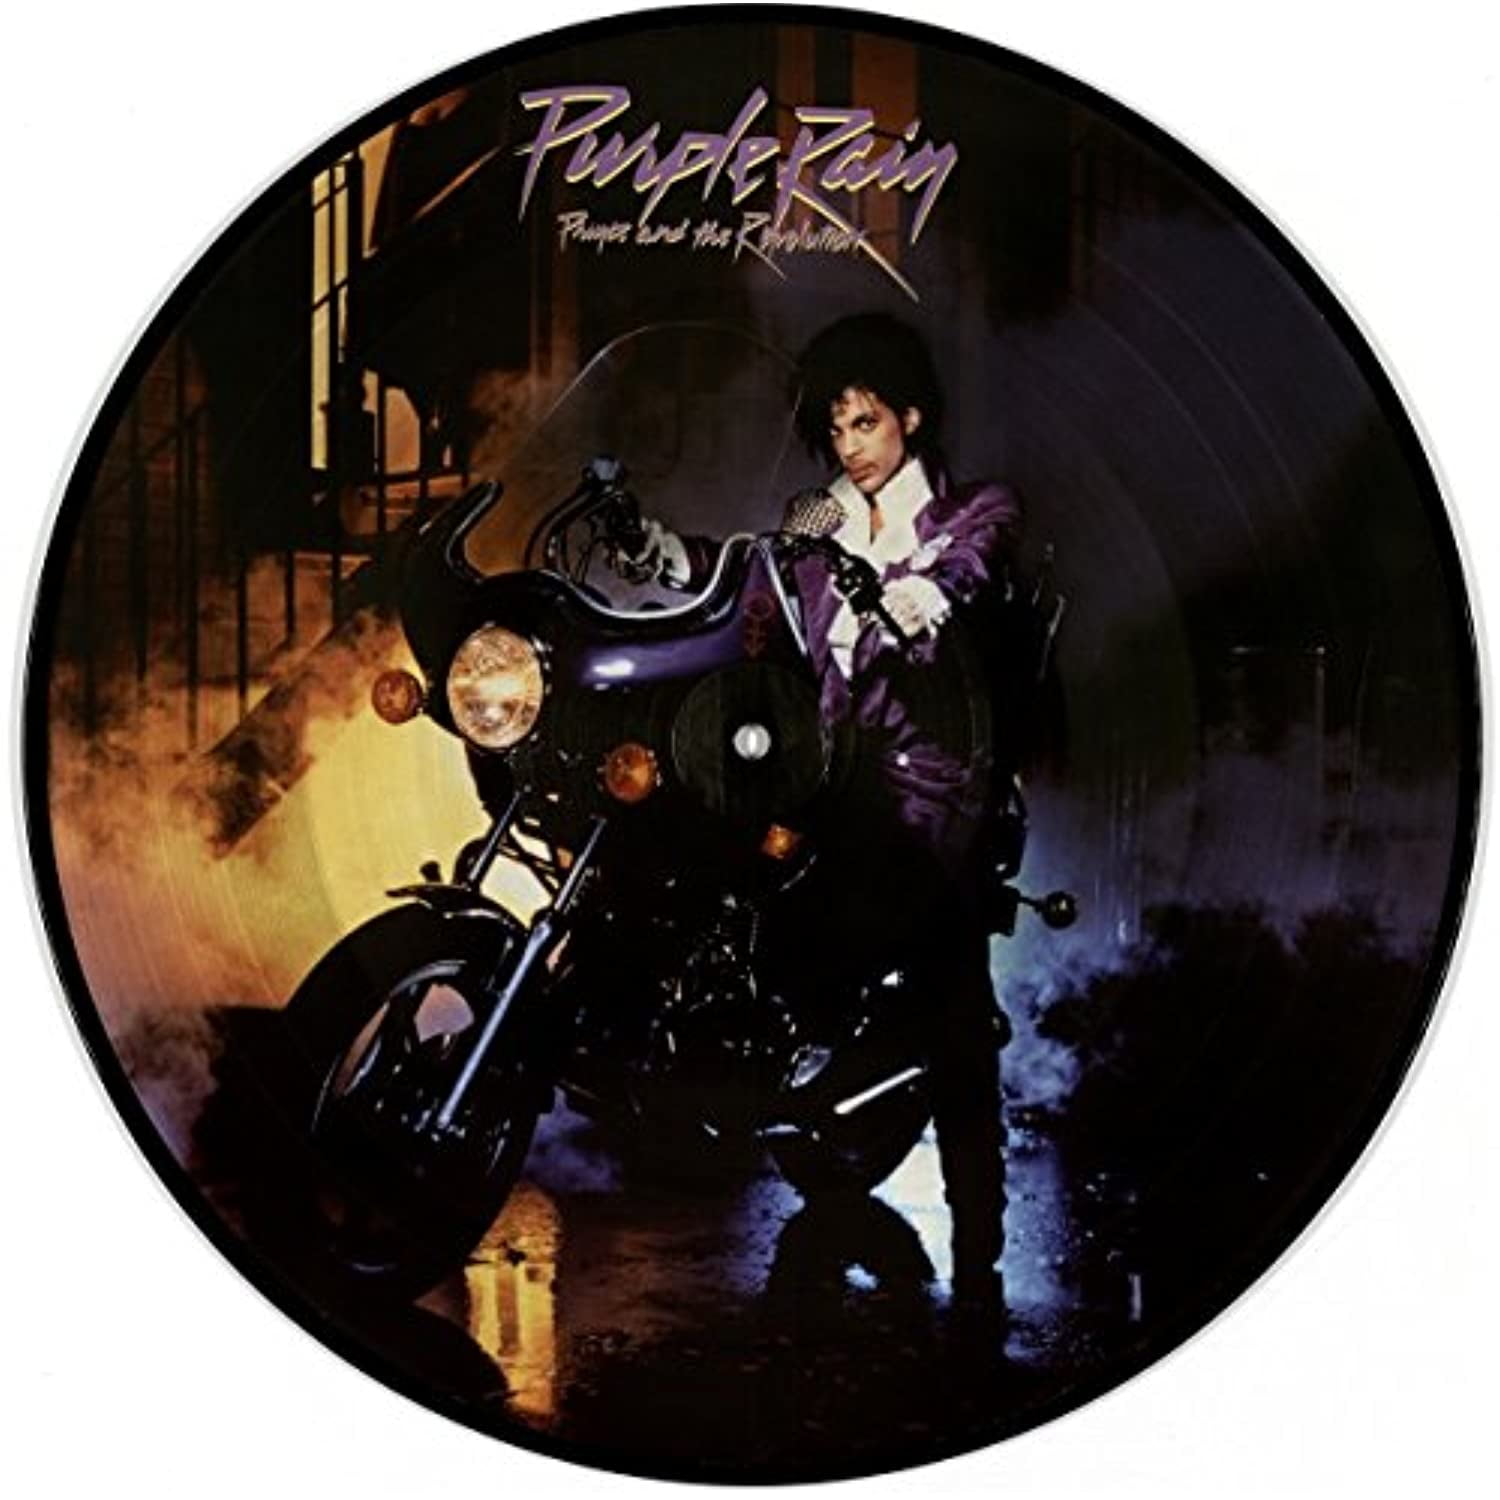 Prince PURPLE RAIN Wall Sticker  Art Decal Celebrity Pop Singer New Removable 